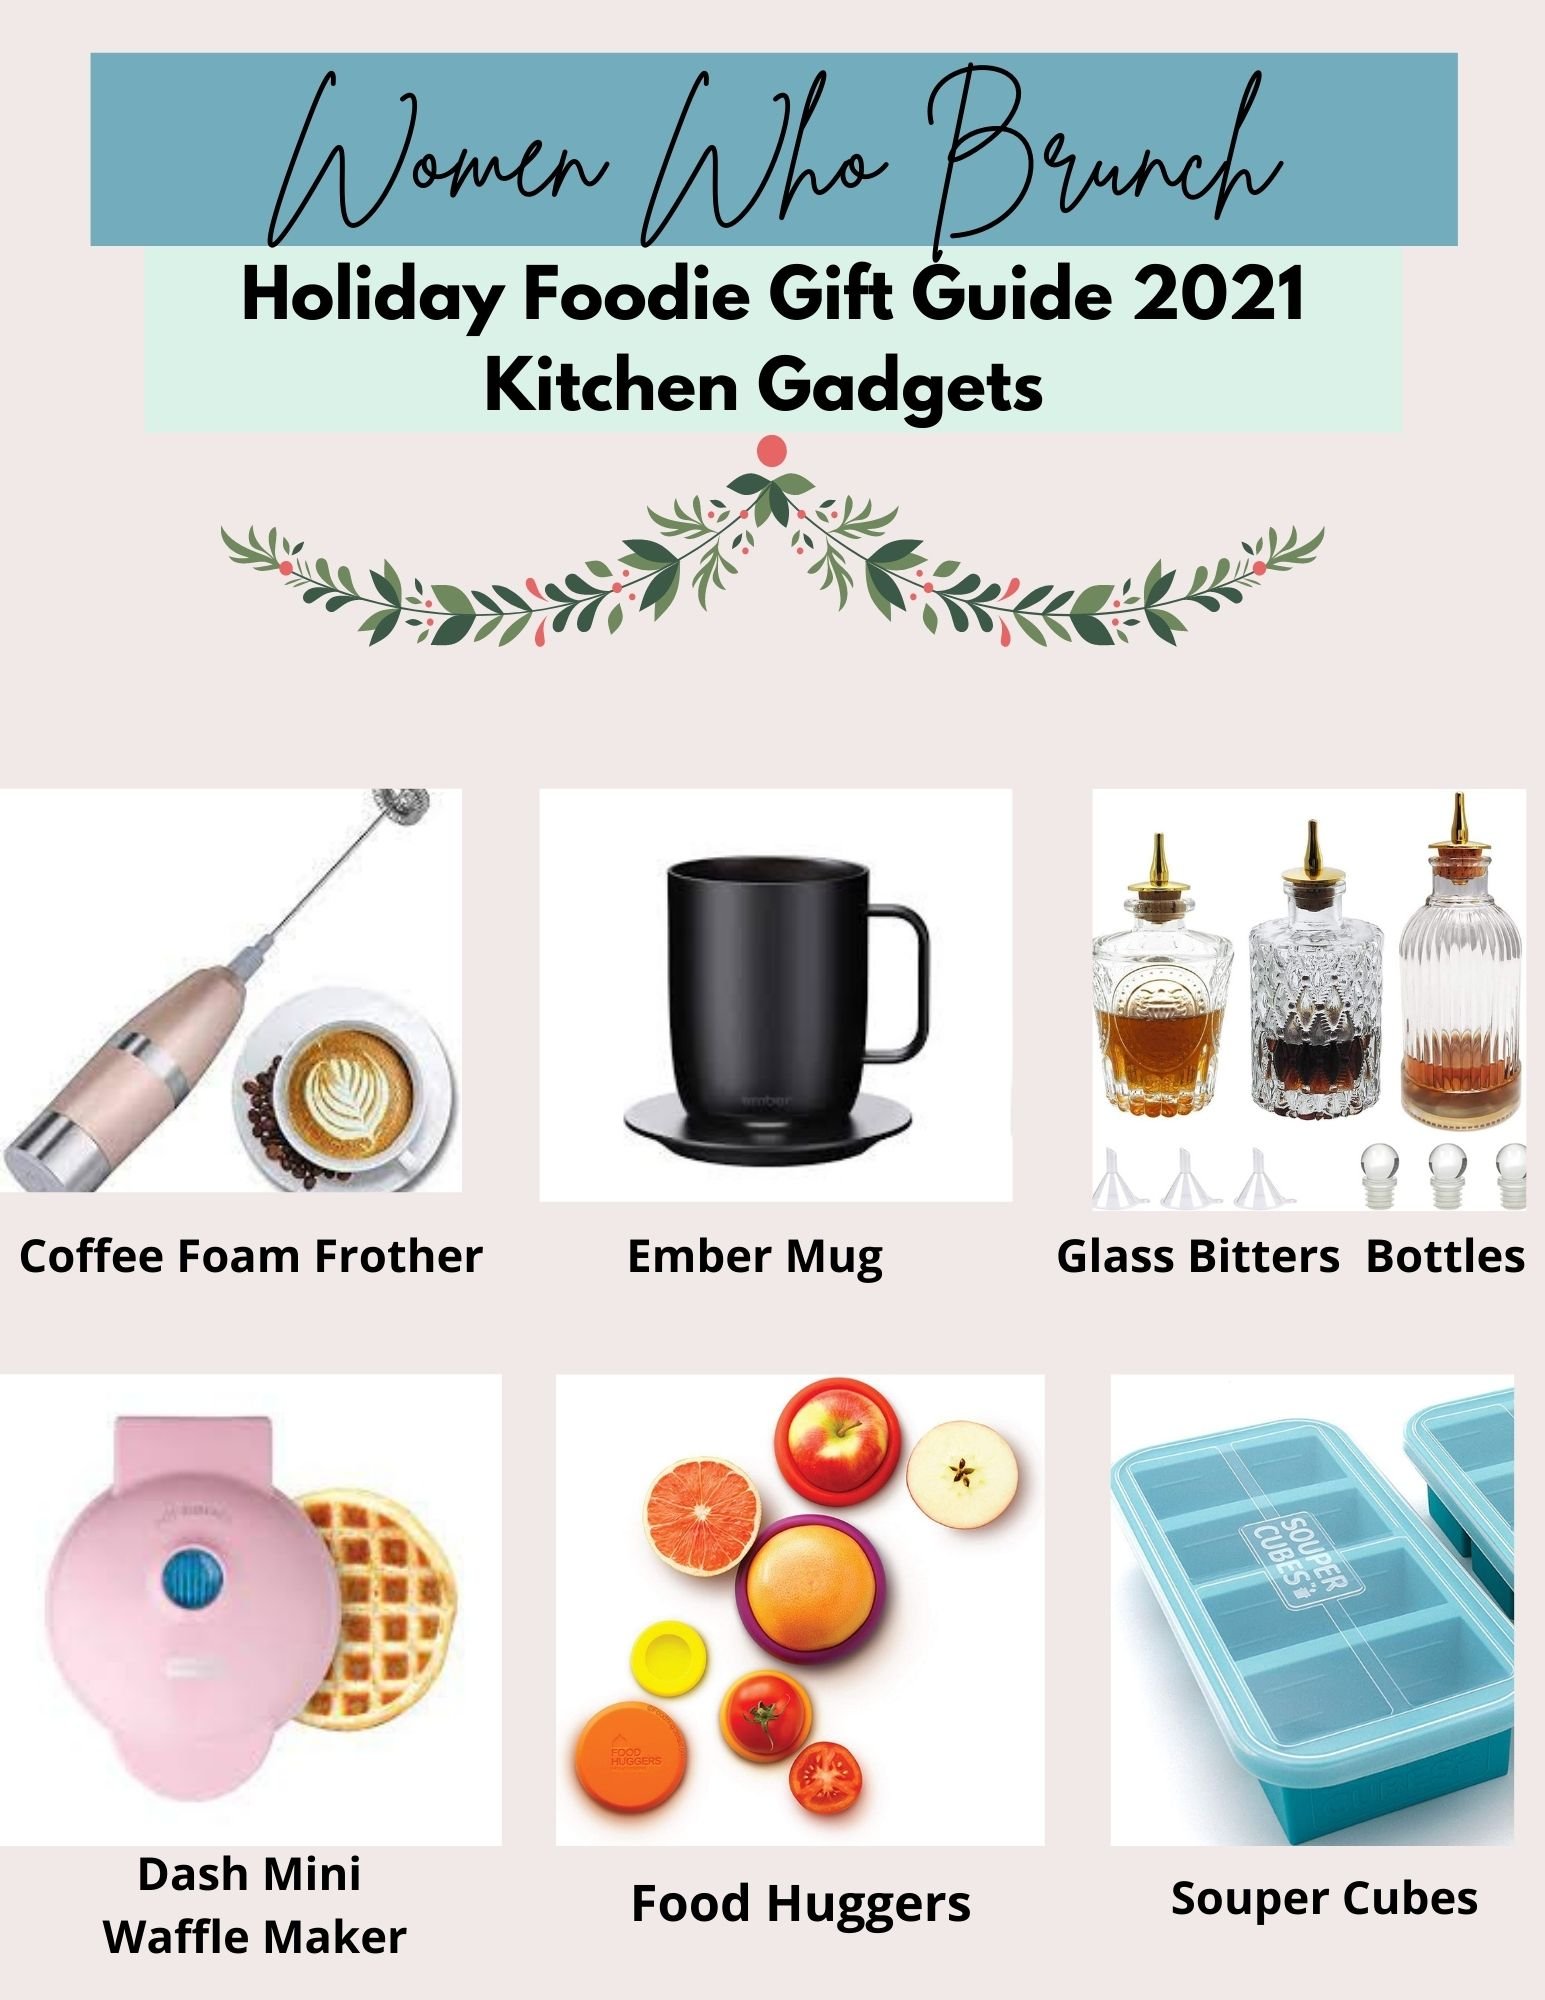 https://images.squarespace-cdn.com/content/v1/5b5e17e9620b85a43982f350/1634872488856-LRI51D51HRYSS9W24UQP/Holiday+Food+Gift+Guide+2021+Kitchen+Favorties.jpg